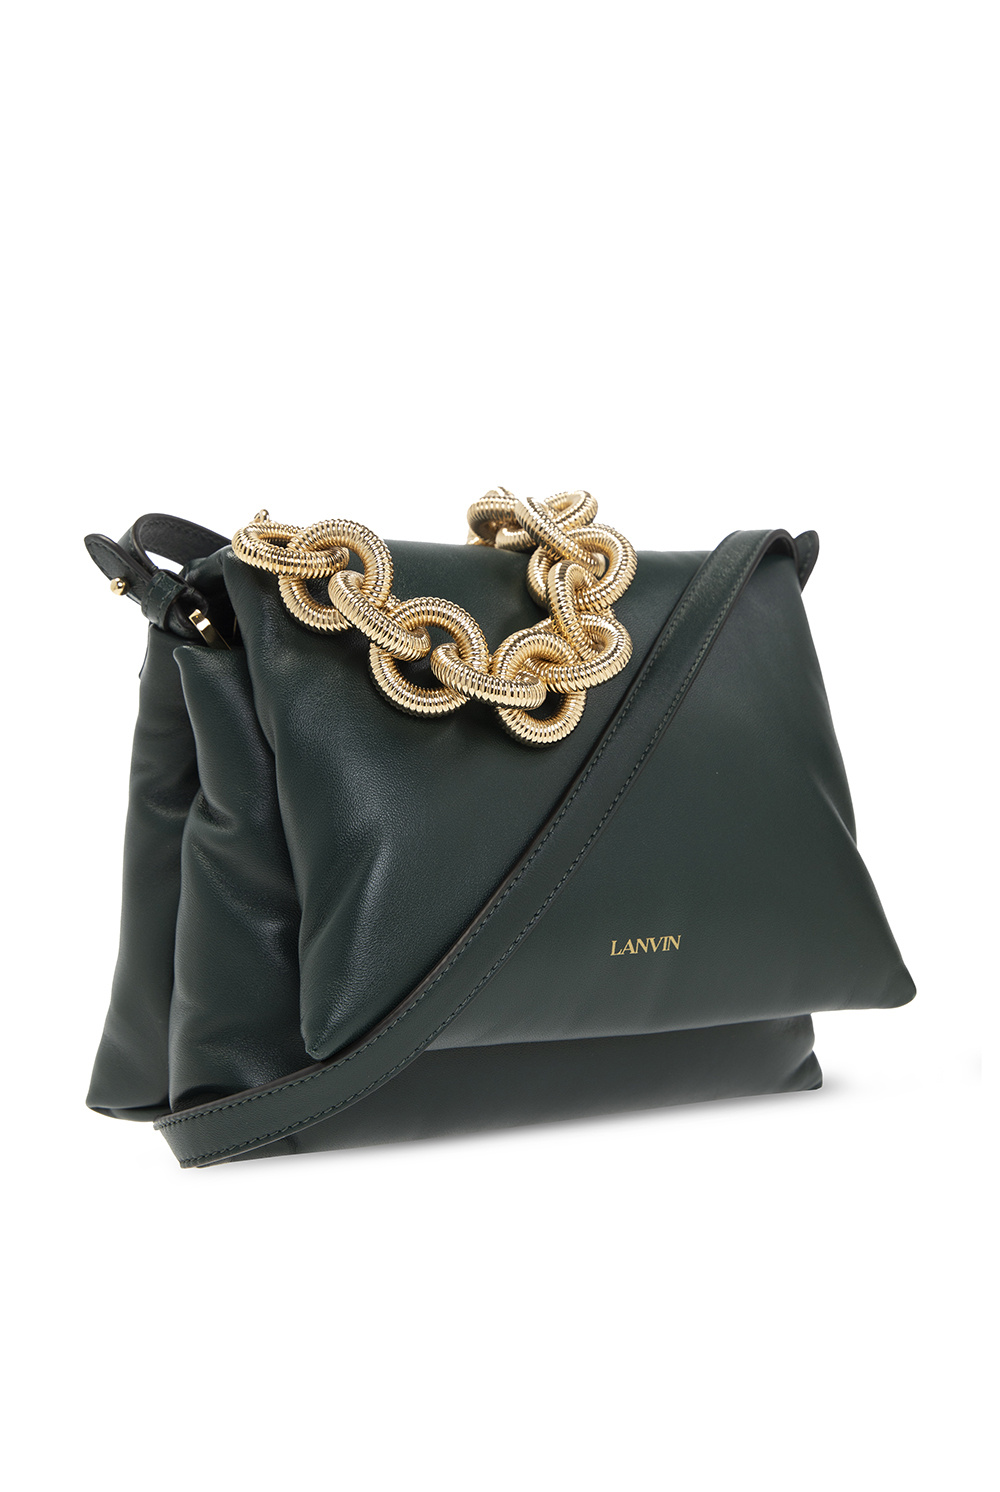 Lanvin ‘Sugar Small’ shoulder bag